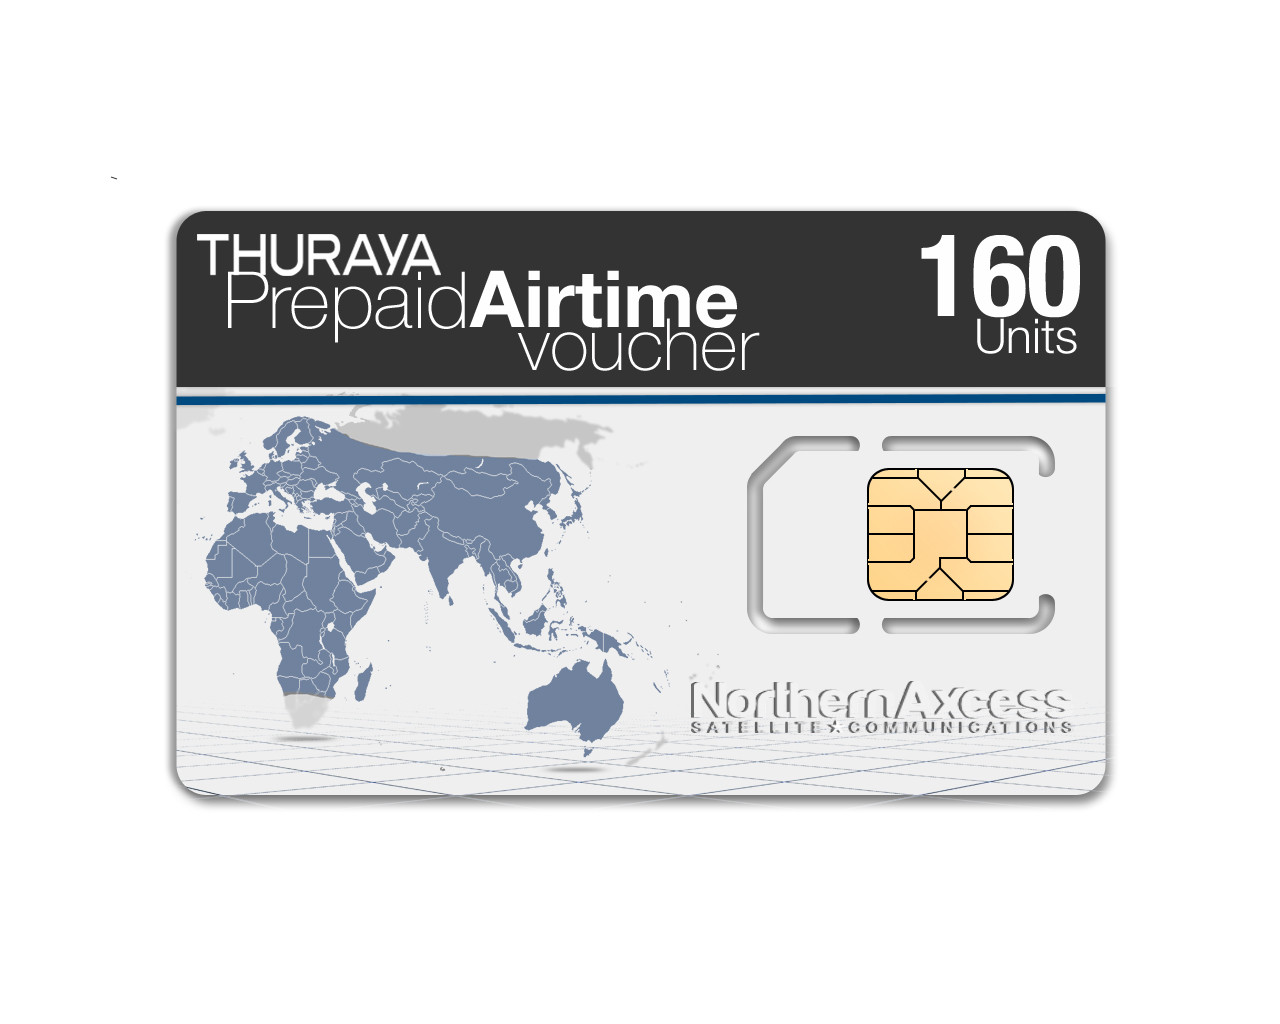 Tarjeta SIM prepago Thuraya NOVA 160 unidades